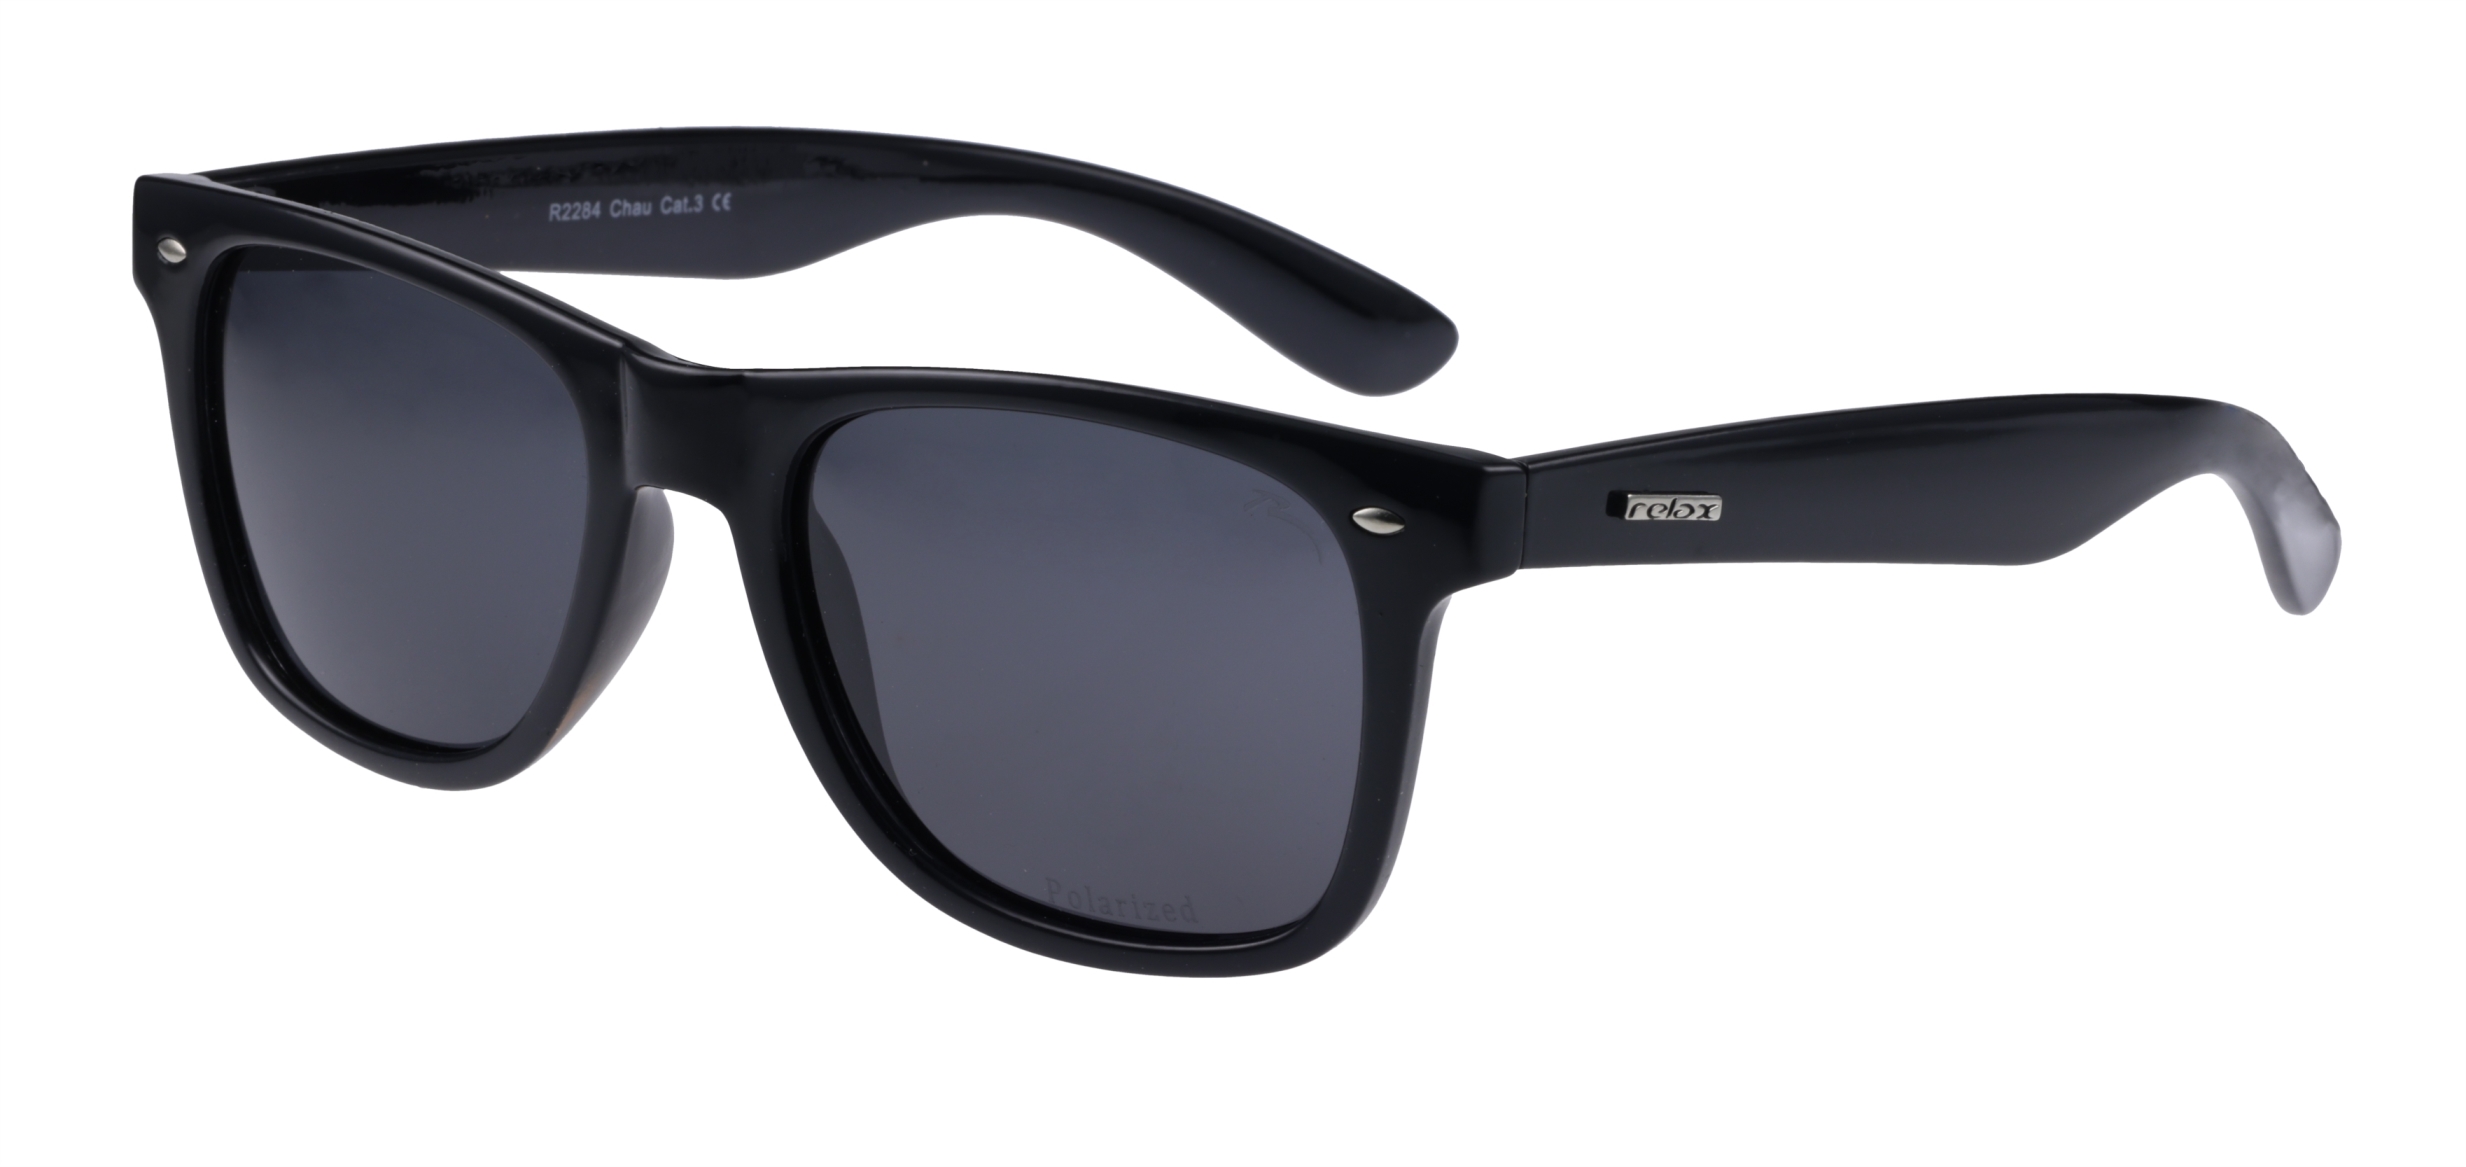 Polarized sunglasses  Relax Chau R2284 standard